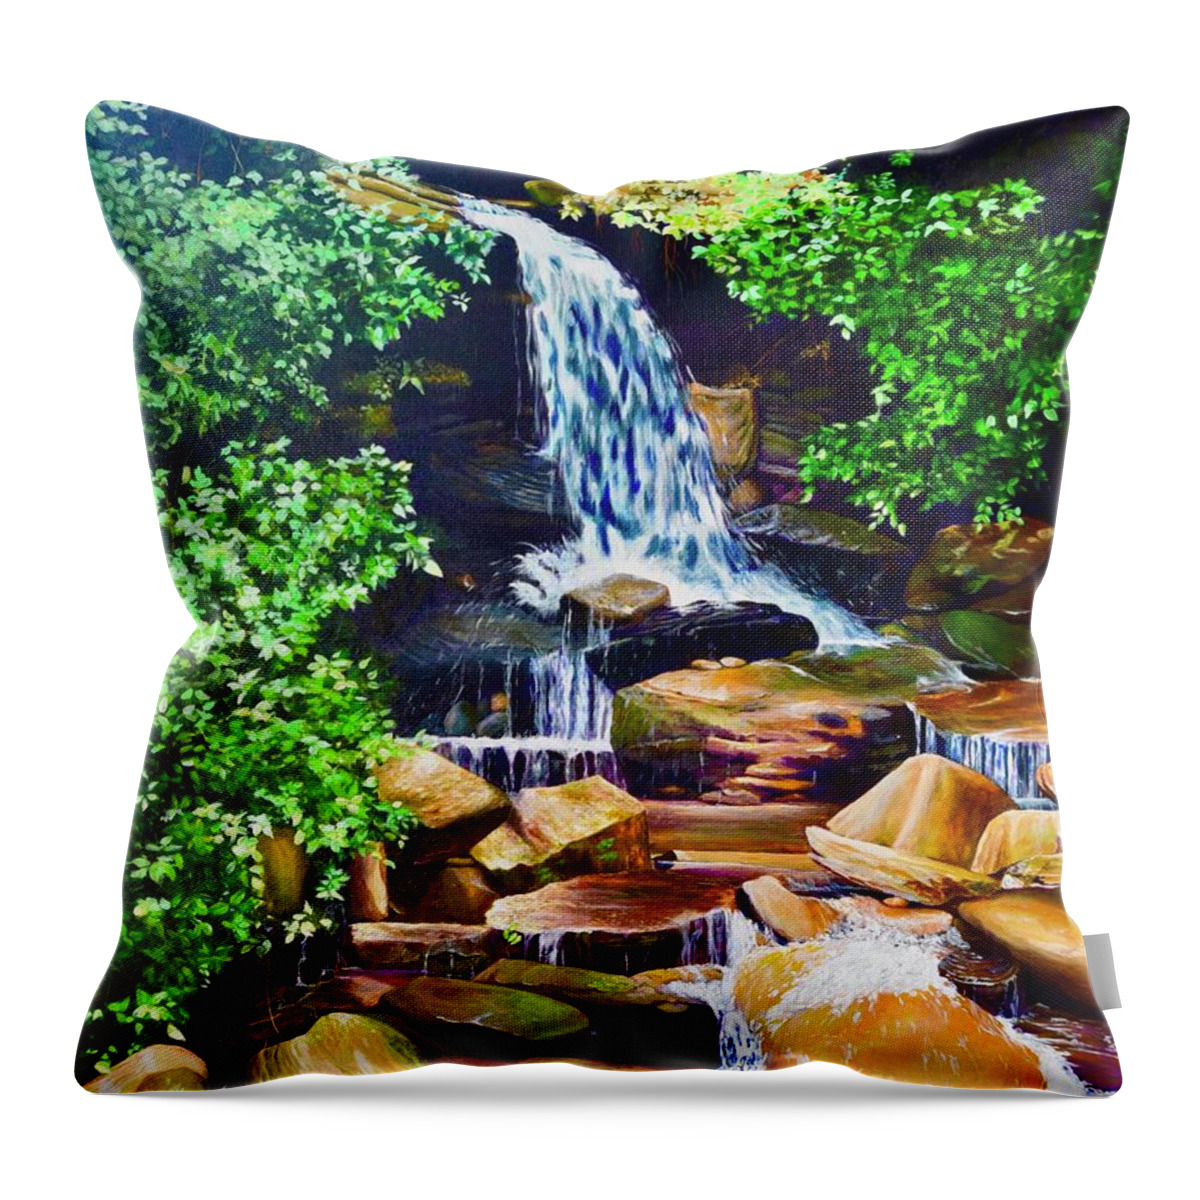 Nantahala National Forest Throw Pillow featuring the painting Nantahala Waterfall by AnnaJo Vahle